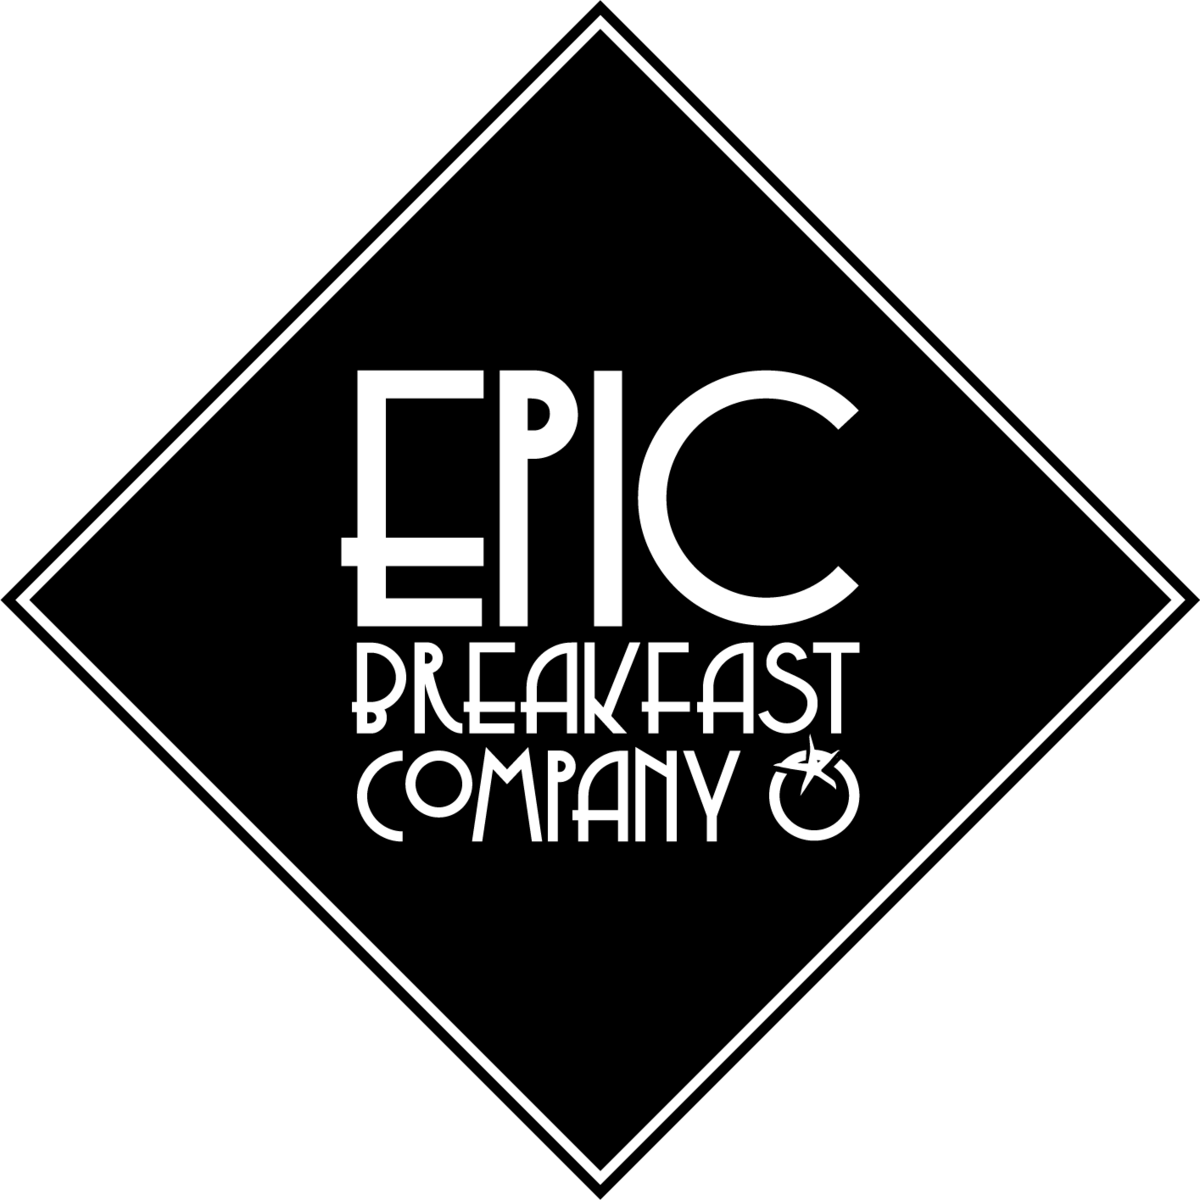 Breakfast Company Logo - Epic Breakfast Company. Bristol's brunch ingredient delivery service